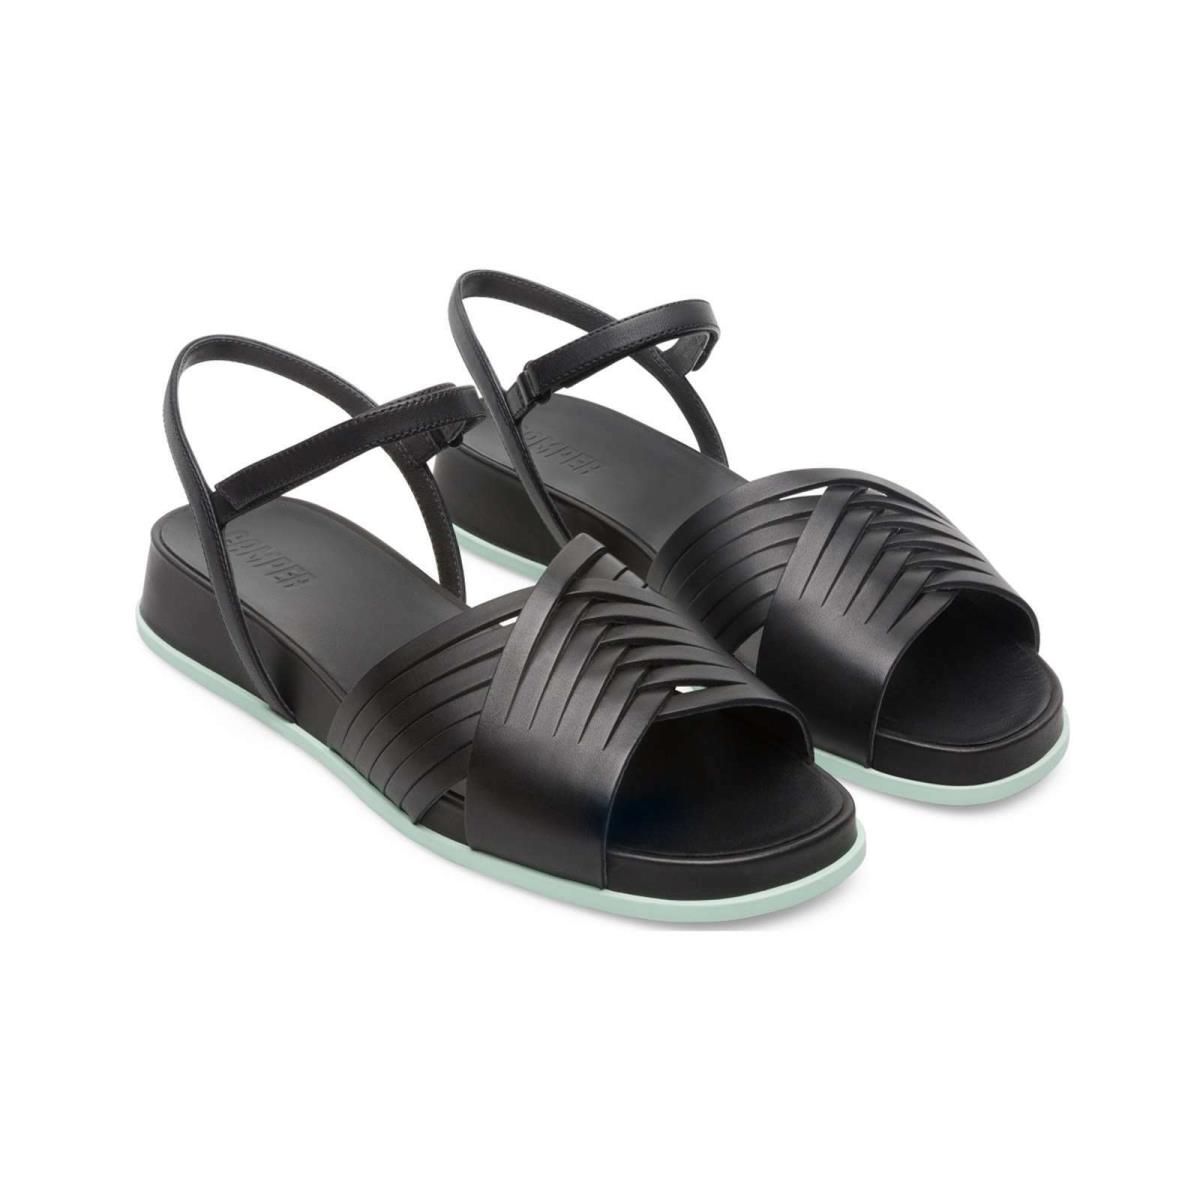 Camper Women s Atonik Shoes Leather Flat Open Toe Sandals - Black/Blue